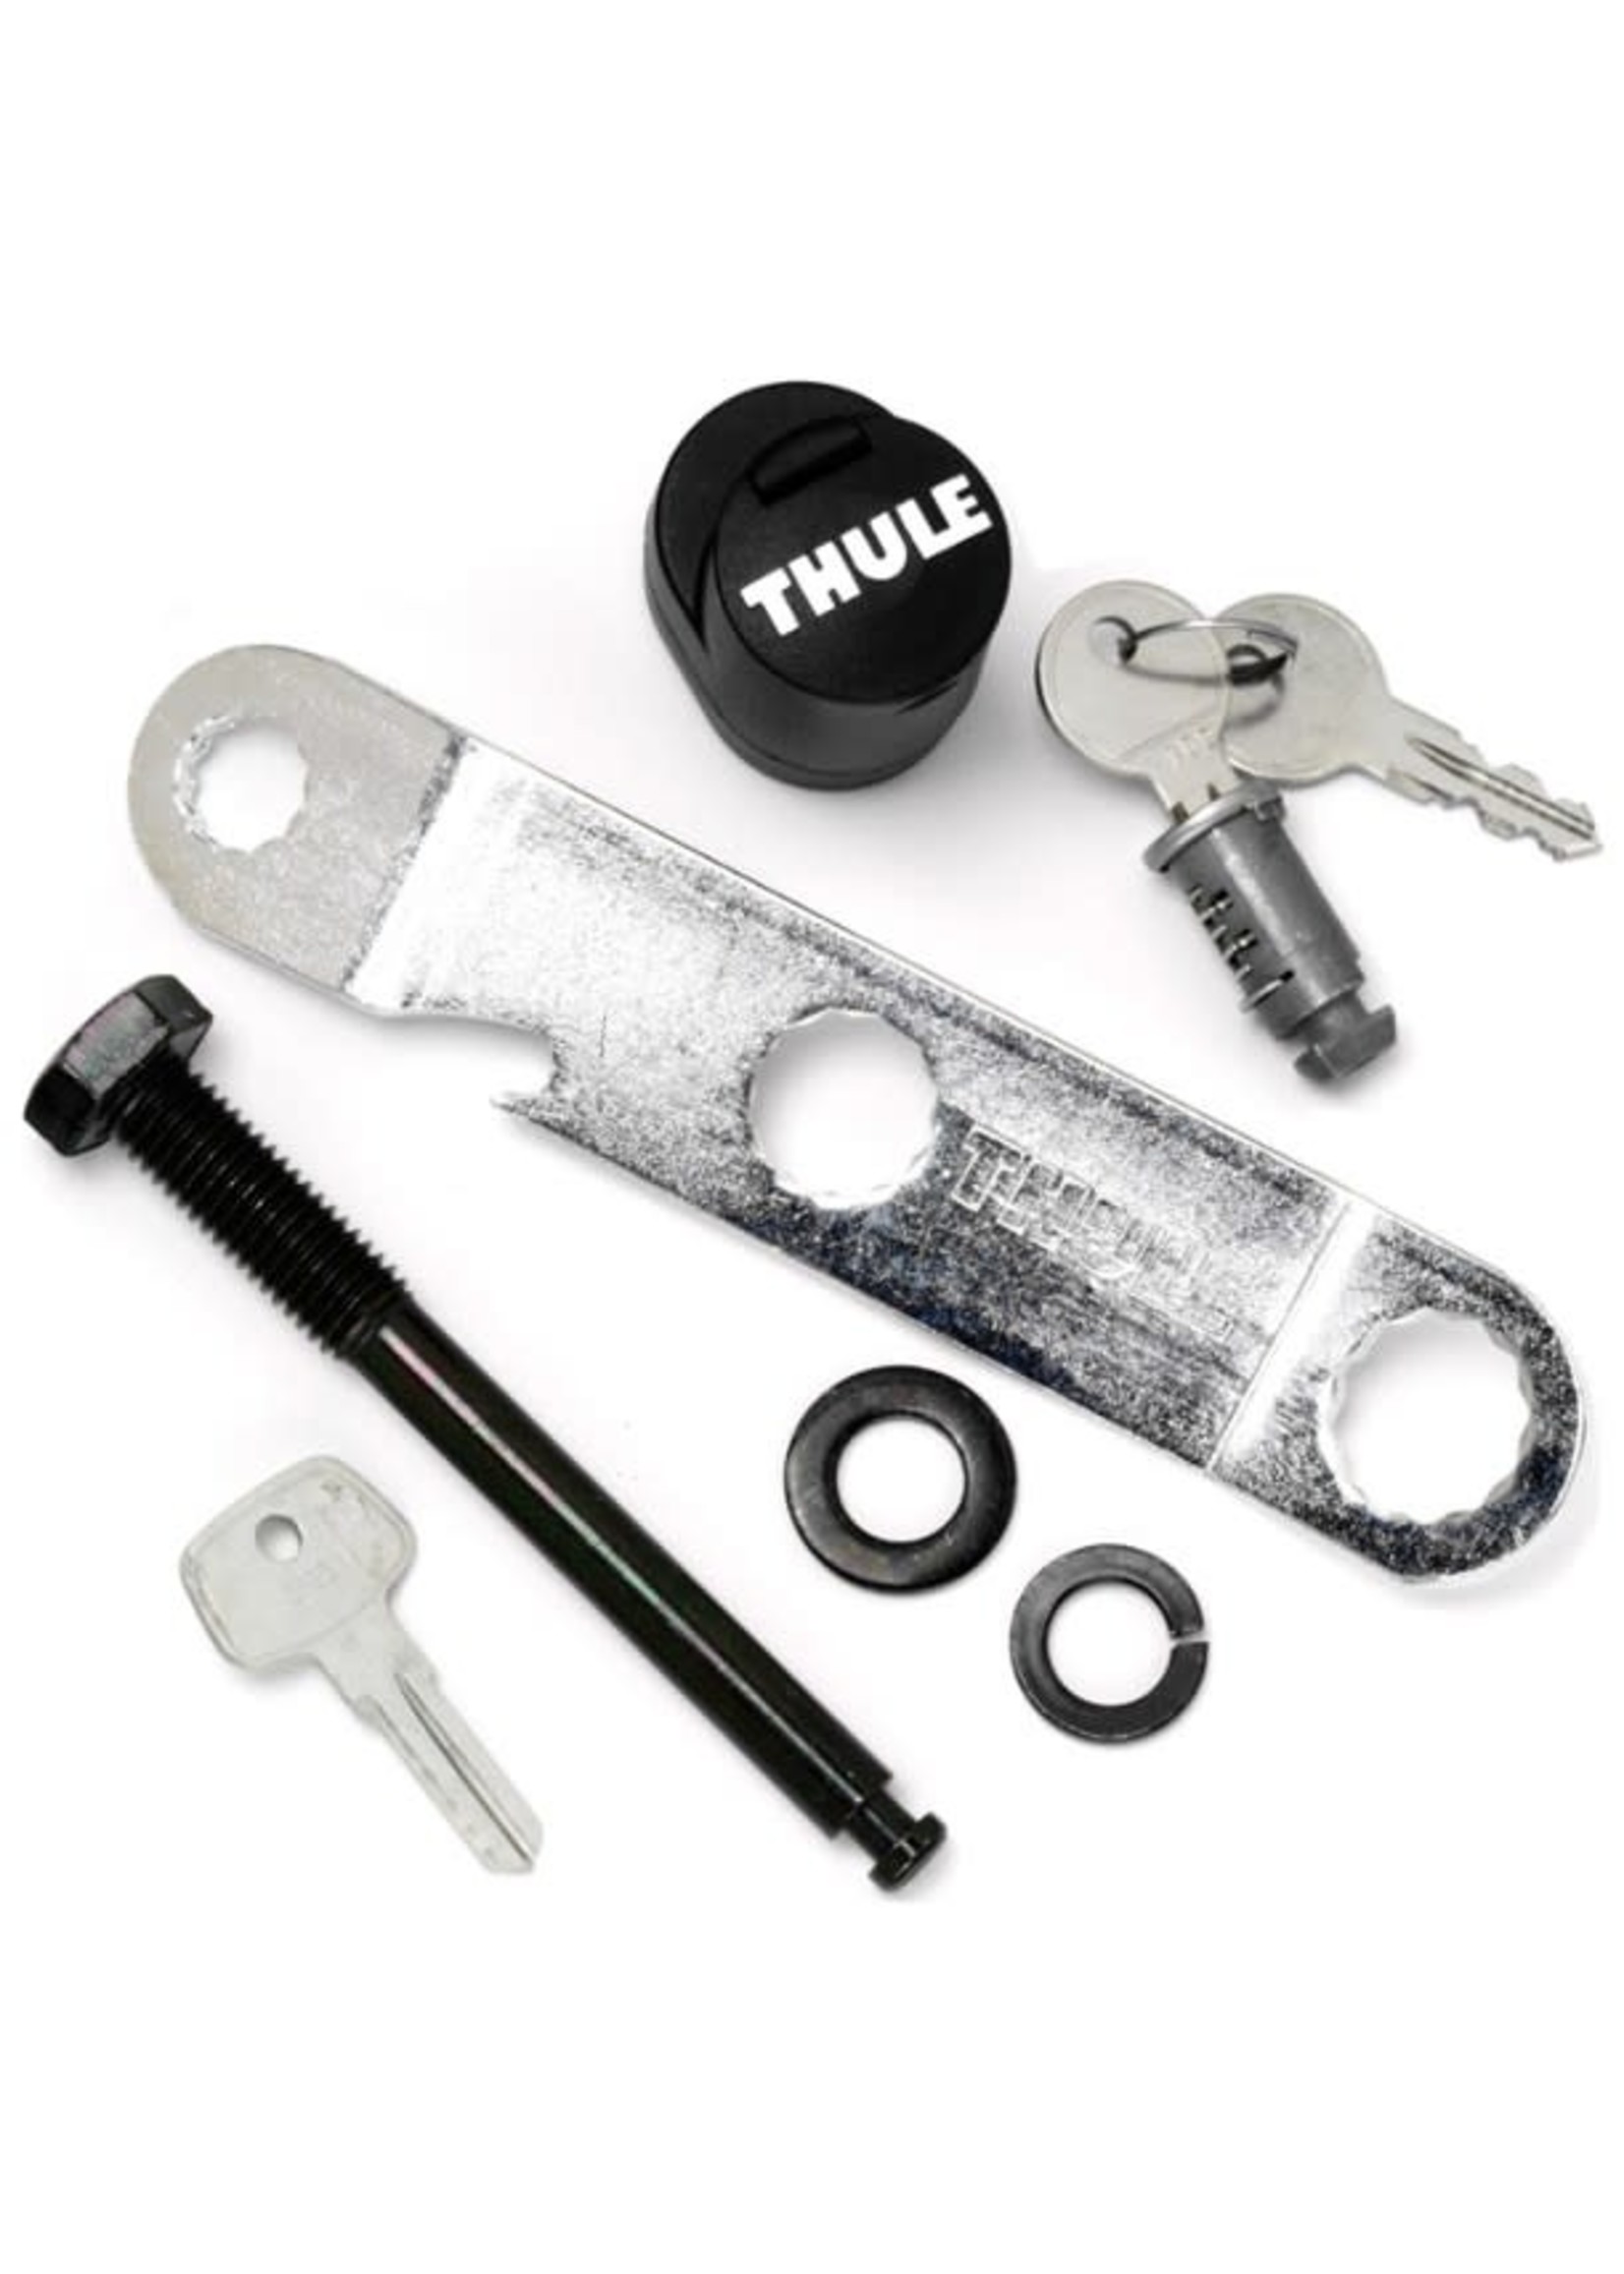 Thule Thule STL2 Snug-Tite Lock for Hitch Rack